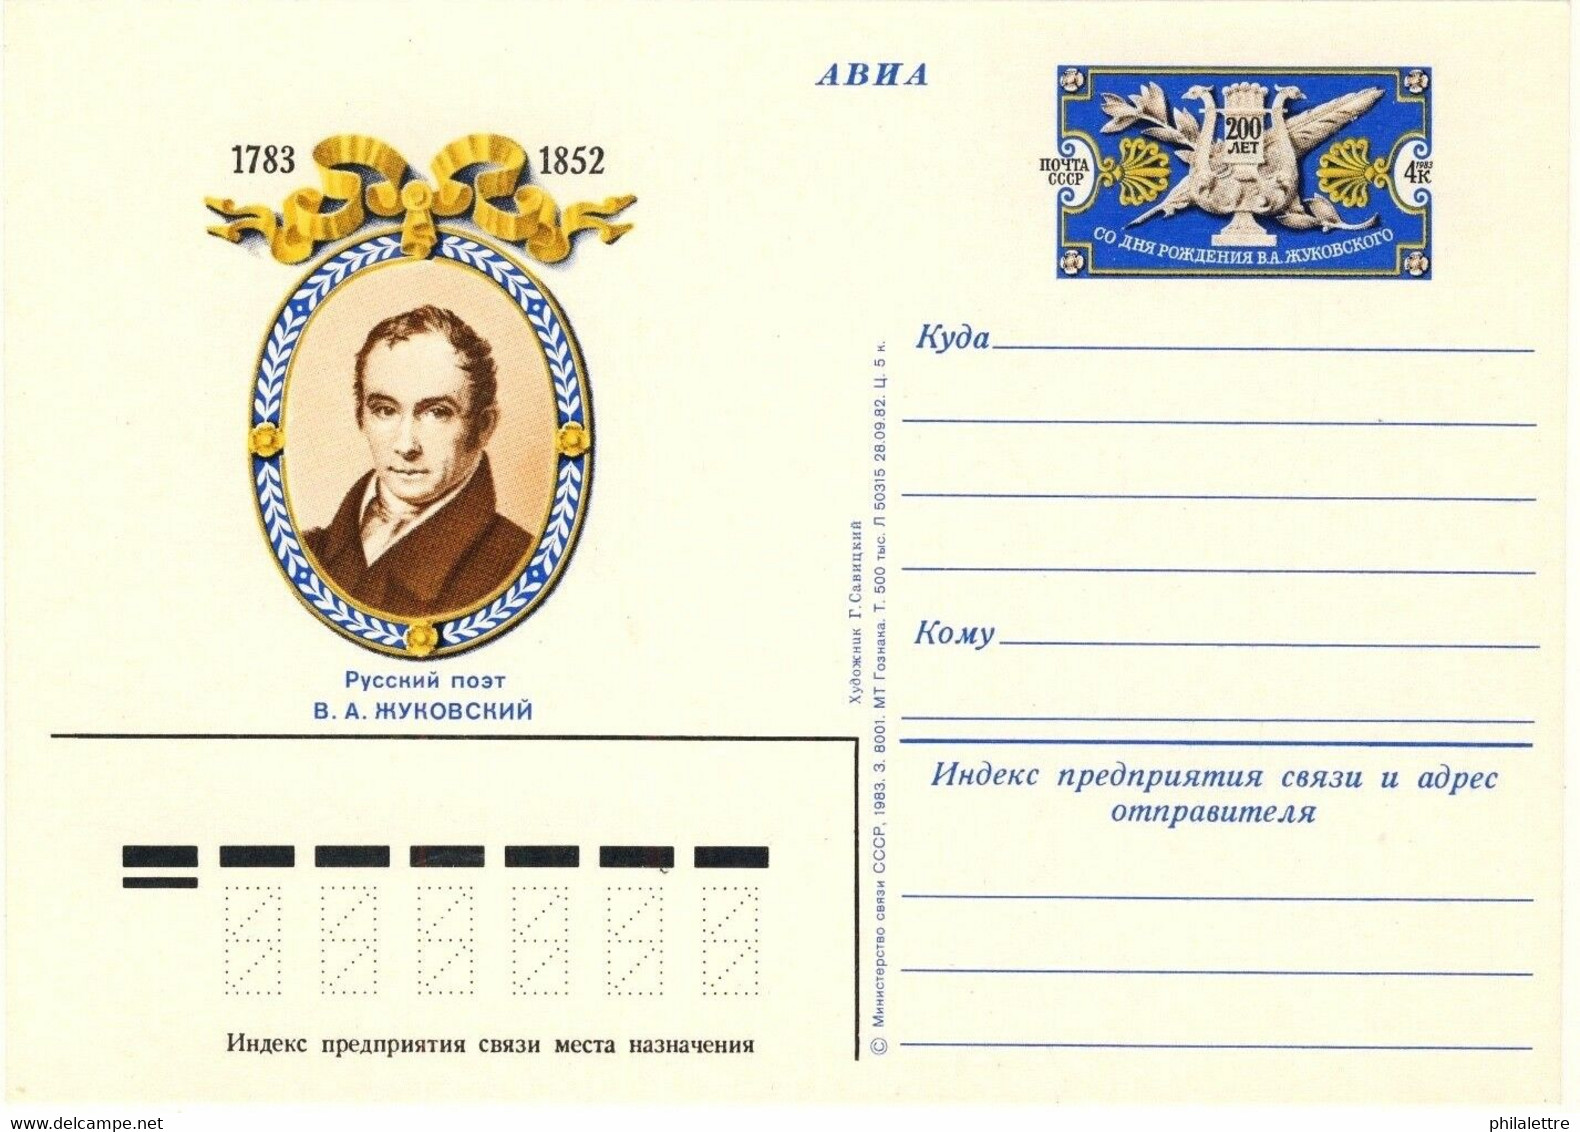 URSS Soviet Union - 1983 4kp CARD 200th ANNIV. RUSSIAN POET A. JUKOVS Mi.PSO111 - 1980-91